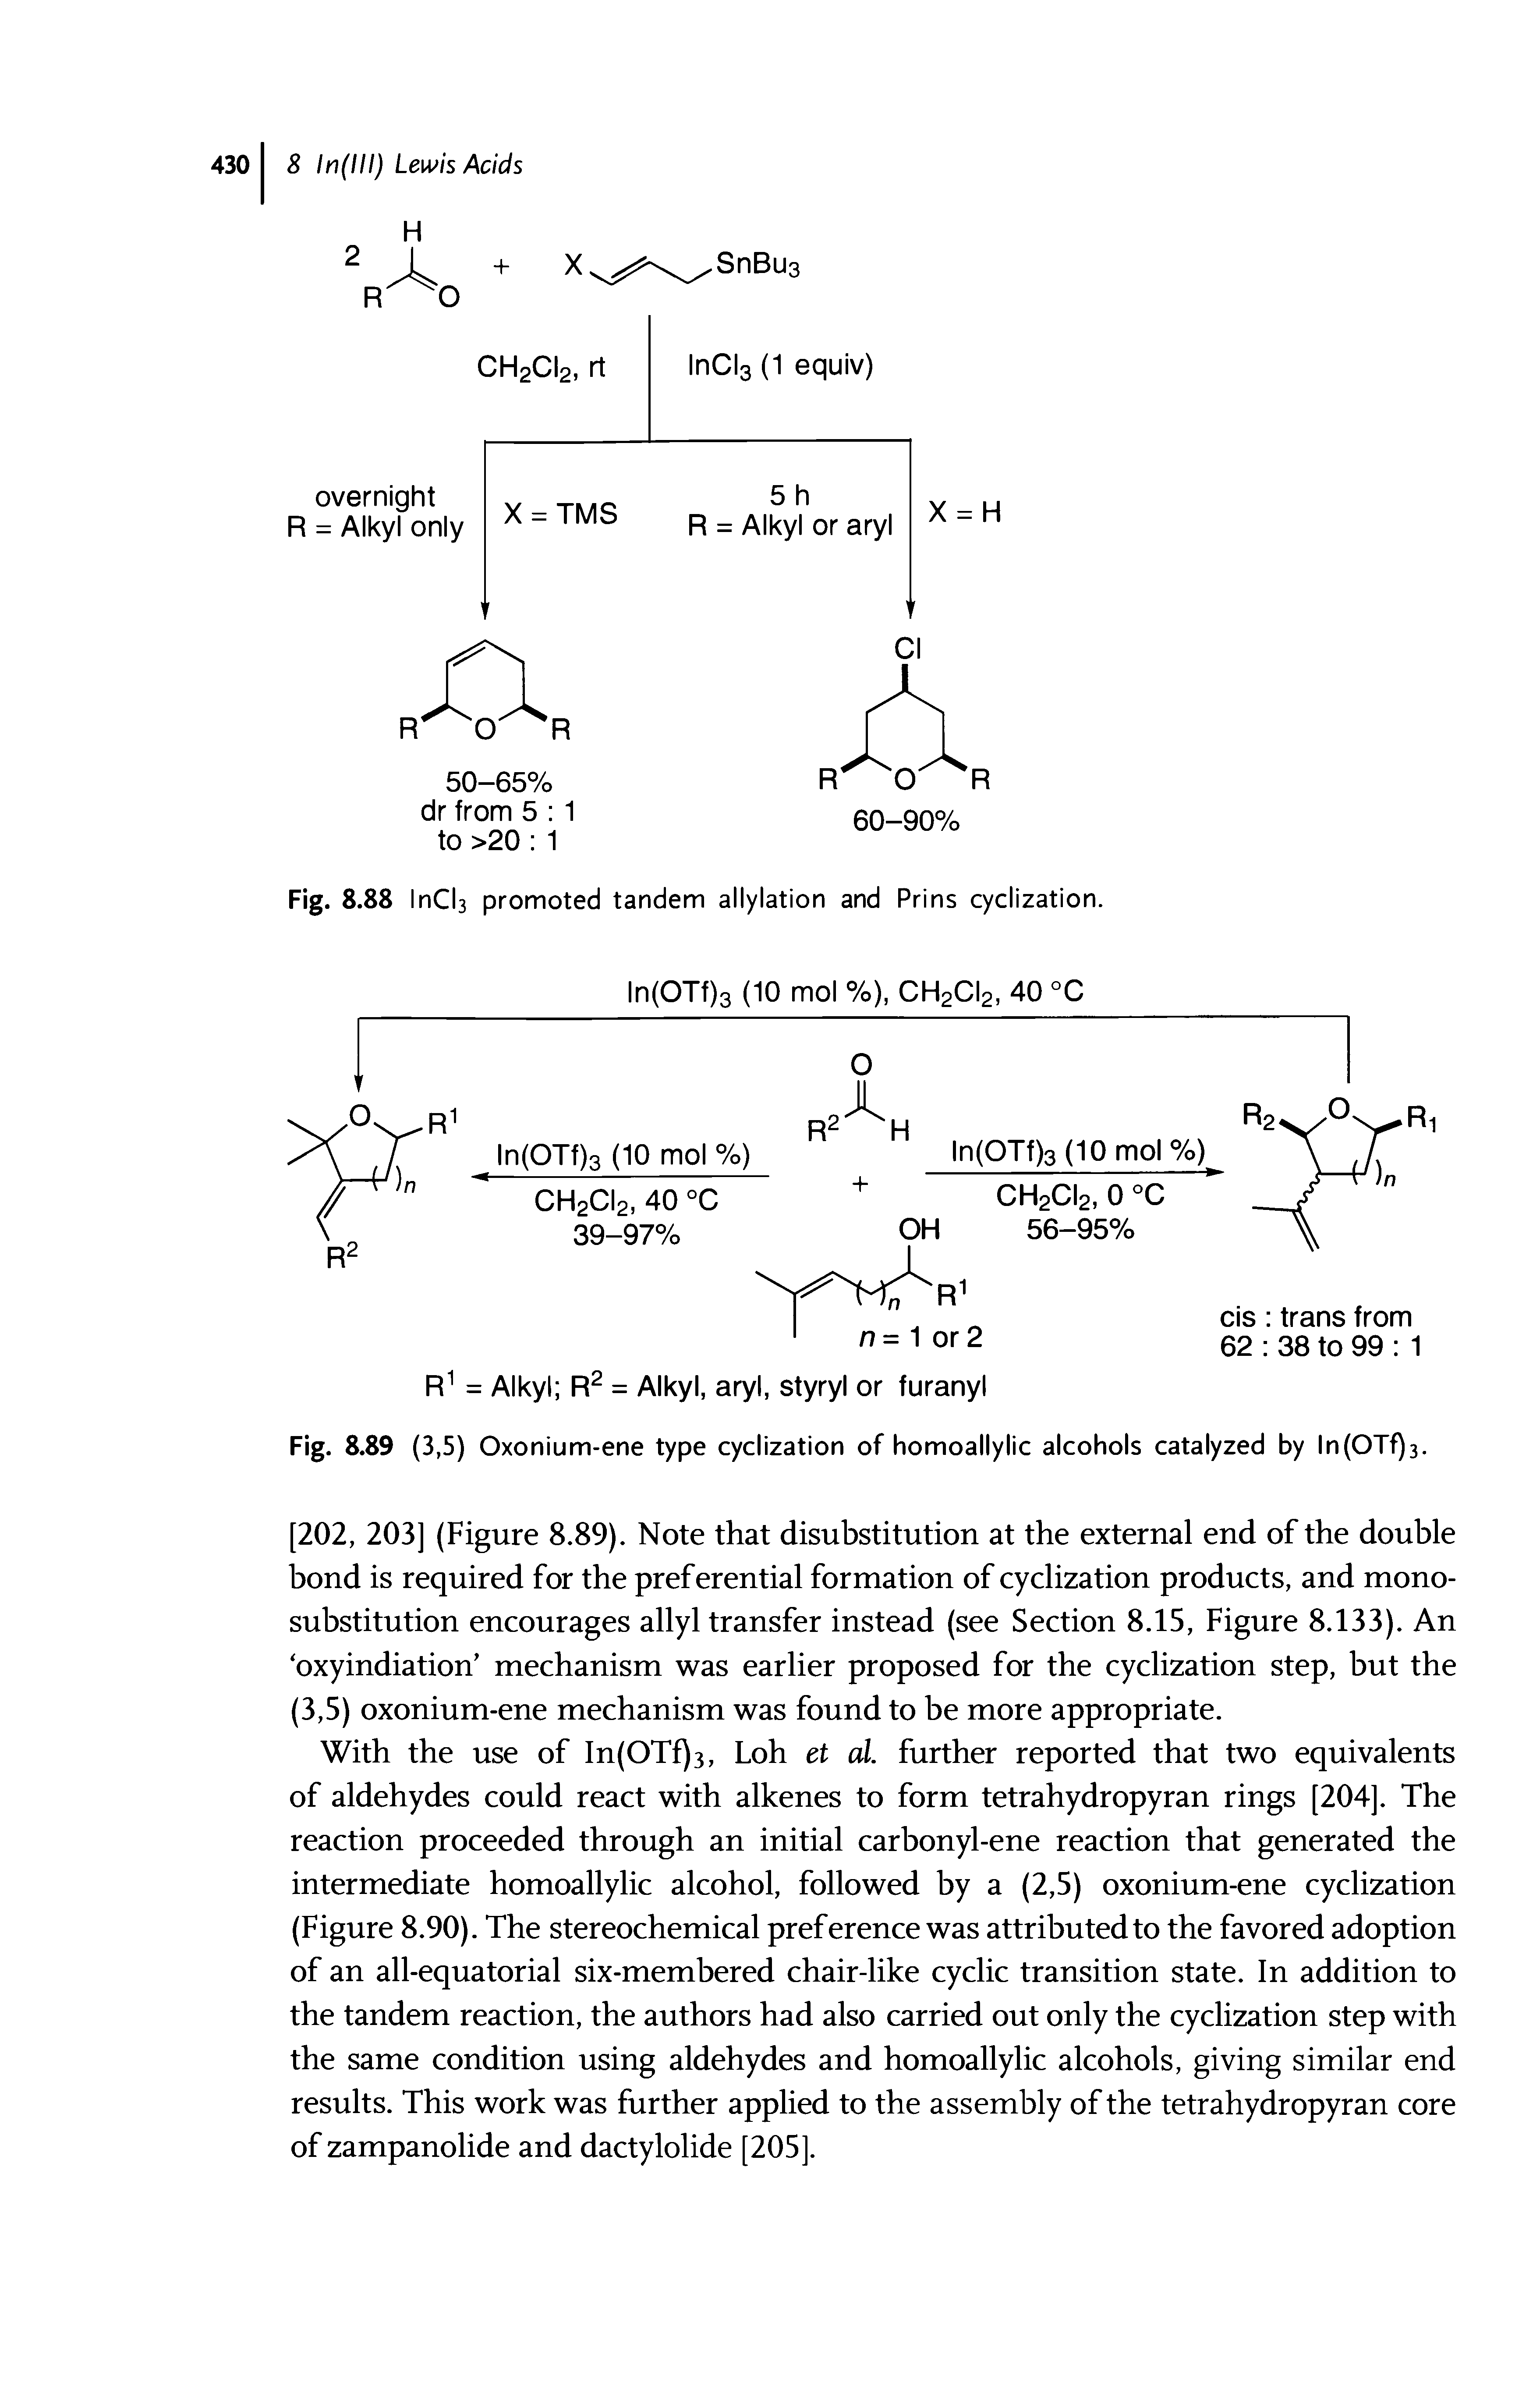 Fig. 8.89 (3,5) Oxonium-ene type cyclization of homoallylic alcohols catalyzed by ln(OTf)3.